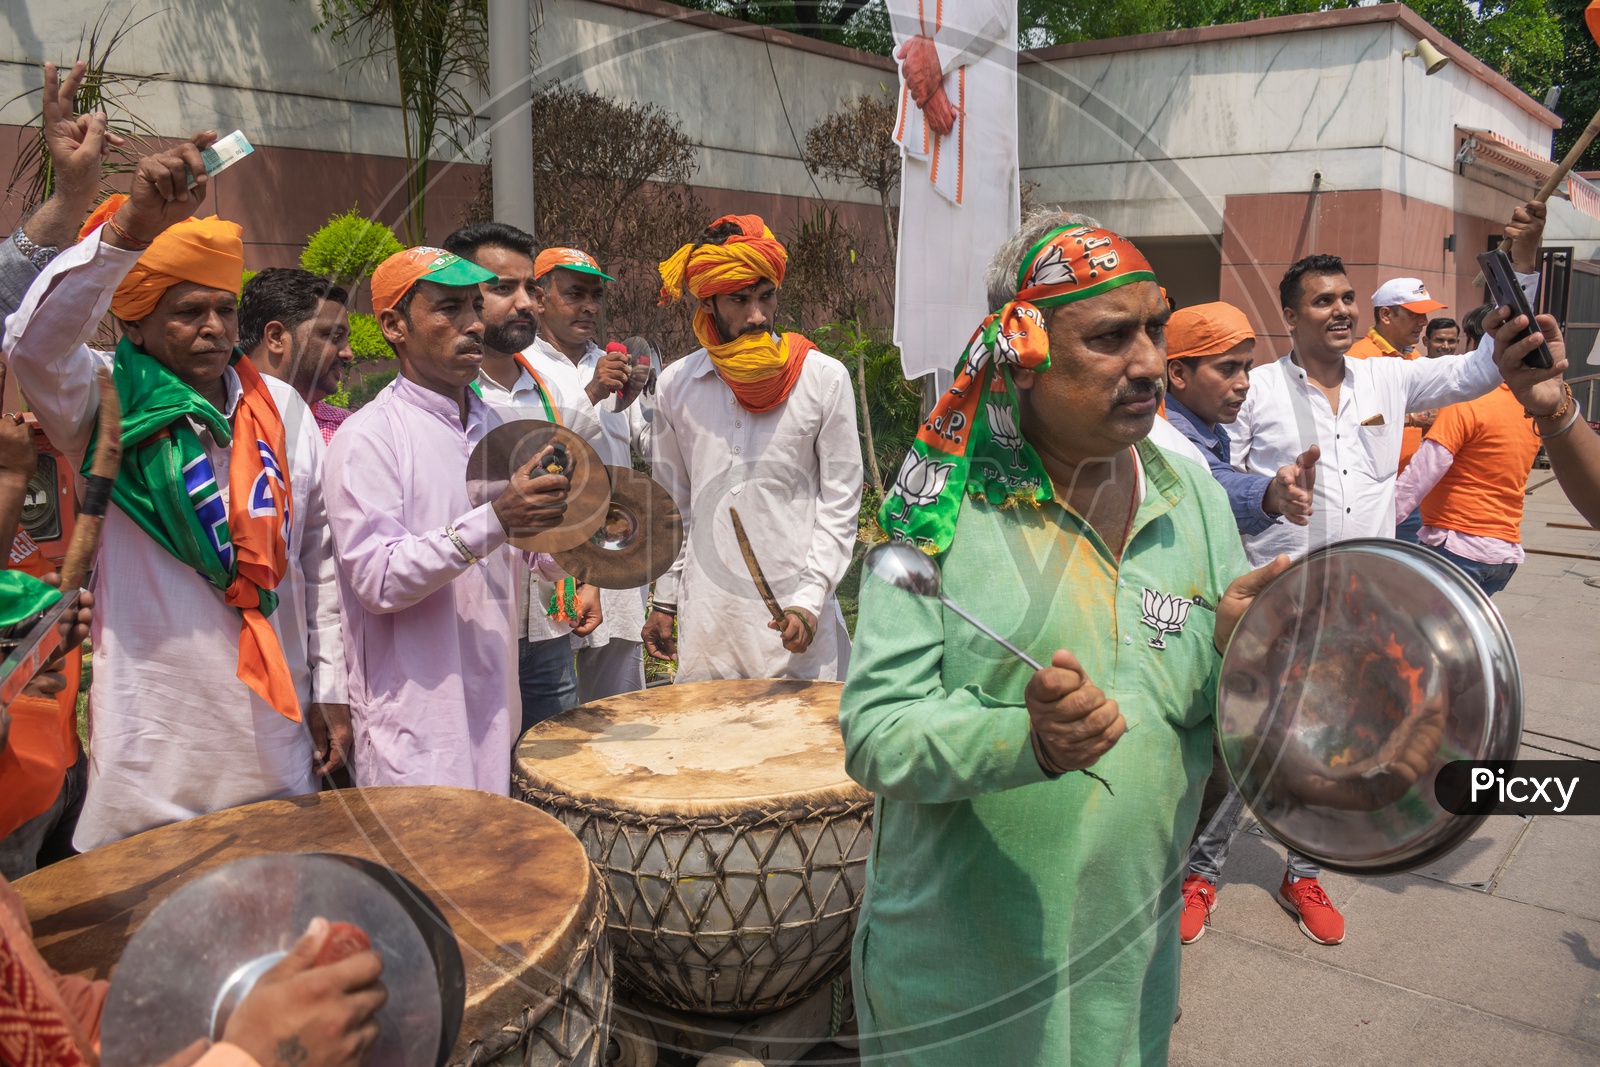 Men playing cymbals (Jhanj-manjira) and drums(Nagada) and a man making a sound with plate at the occasion of Bhartiya Janta Party(BJP) victory